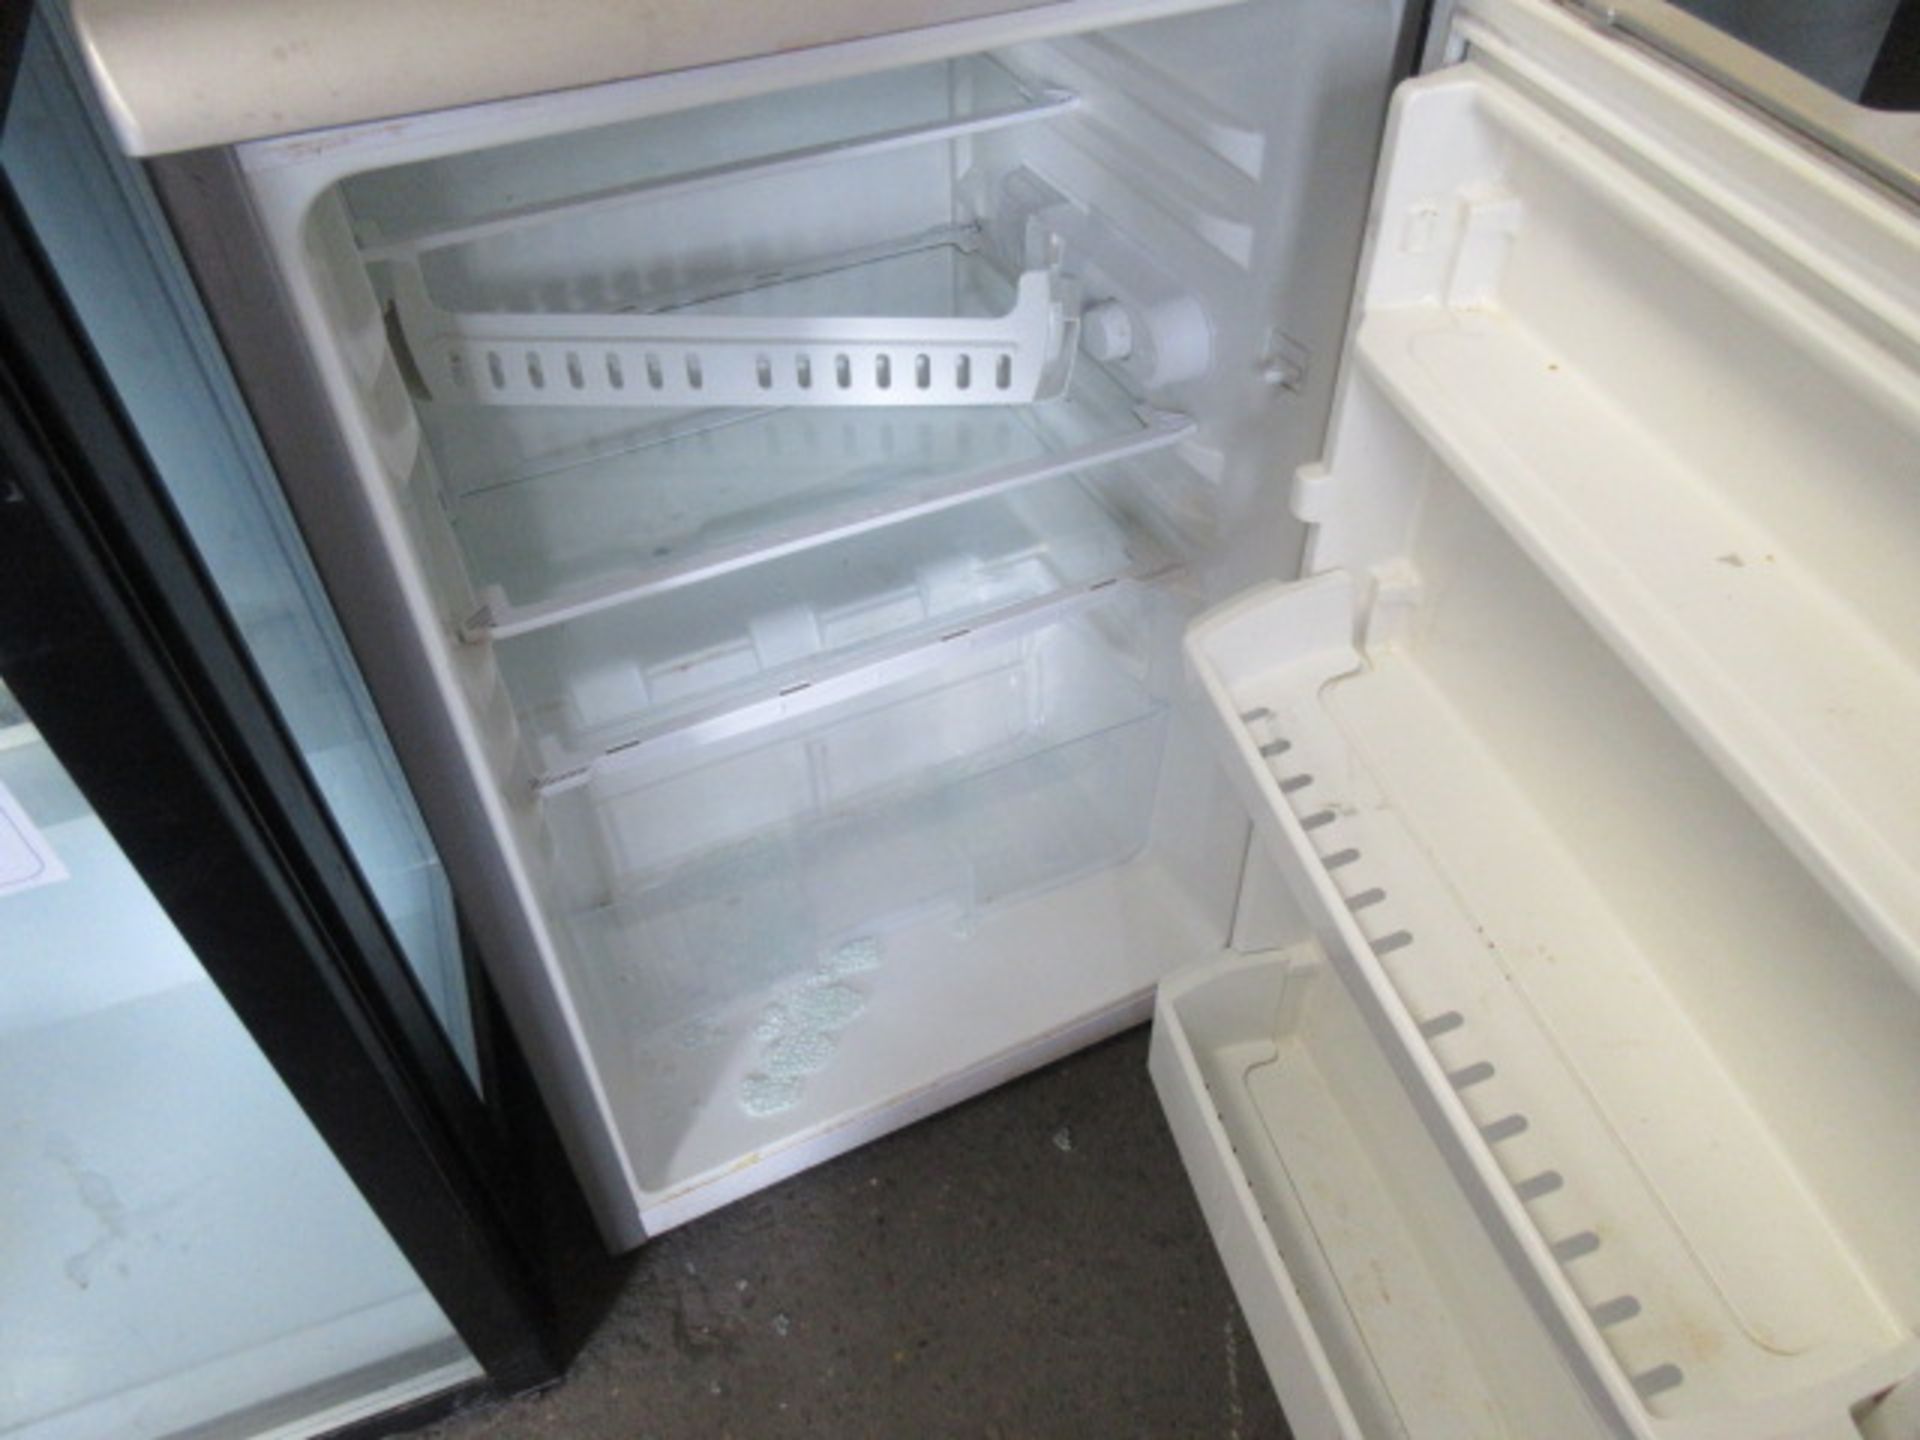 Beko LA620S Refrigerator. 130L capacity, 240v, size 550 x 560 x 850mm high. - Image 2 of 3